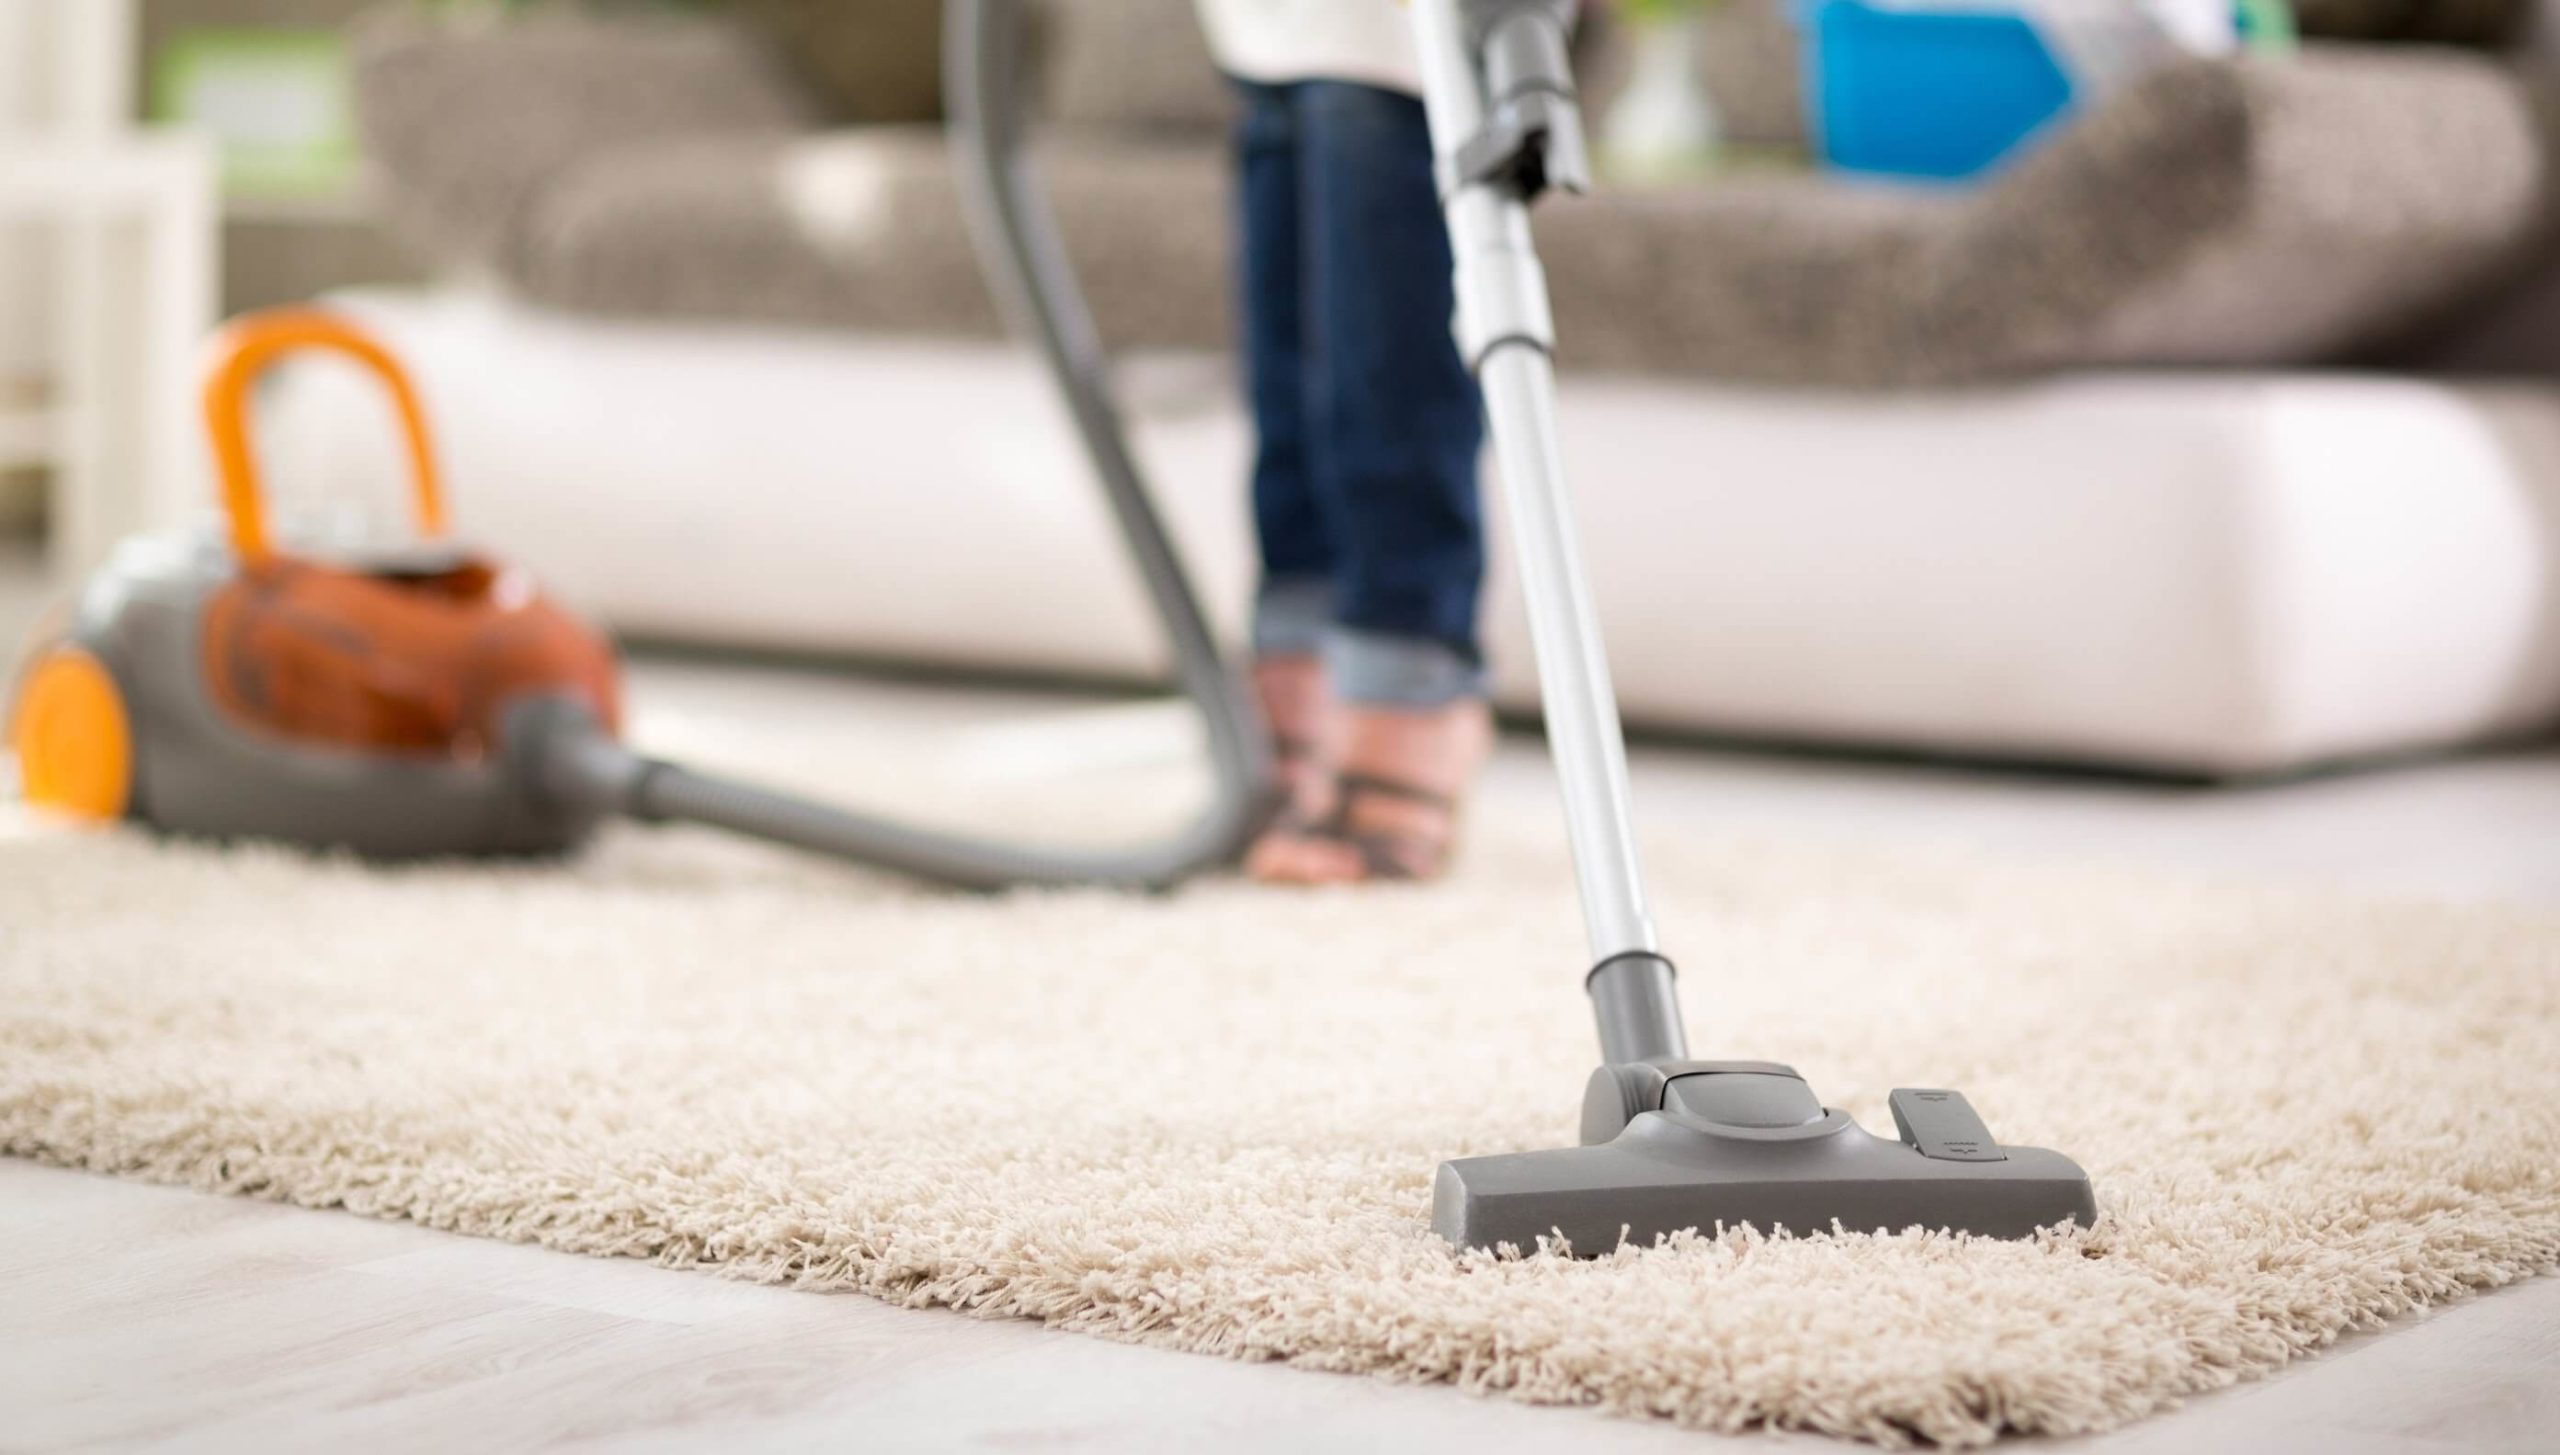 Choose A Sanitized Mat That Doesn’t Splash Disinfectant On Floor